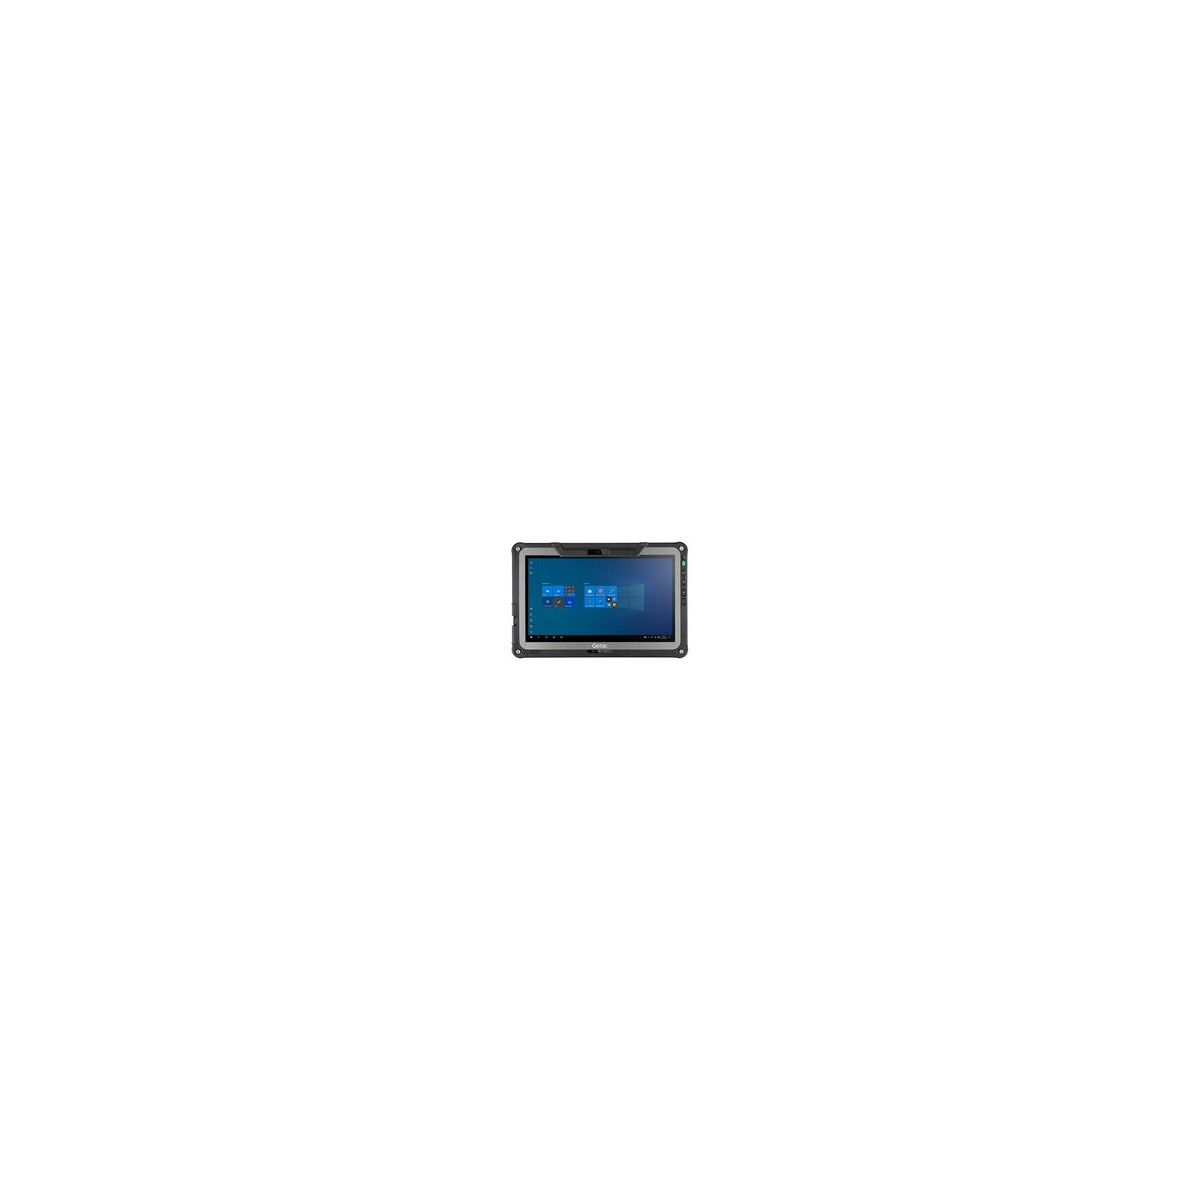 GETAC F110G6 i7-1165G7 11.6IN Webcam W10P 16GB-256GB PCIe SSD SUNR FHD+TS+Digitizer EU AND UK Power Cord Rear Camera WiFi BT Ded